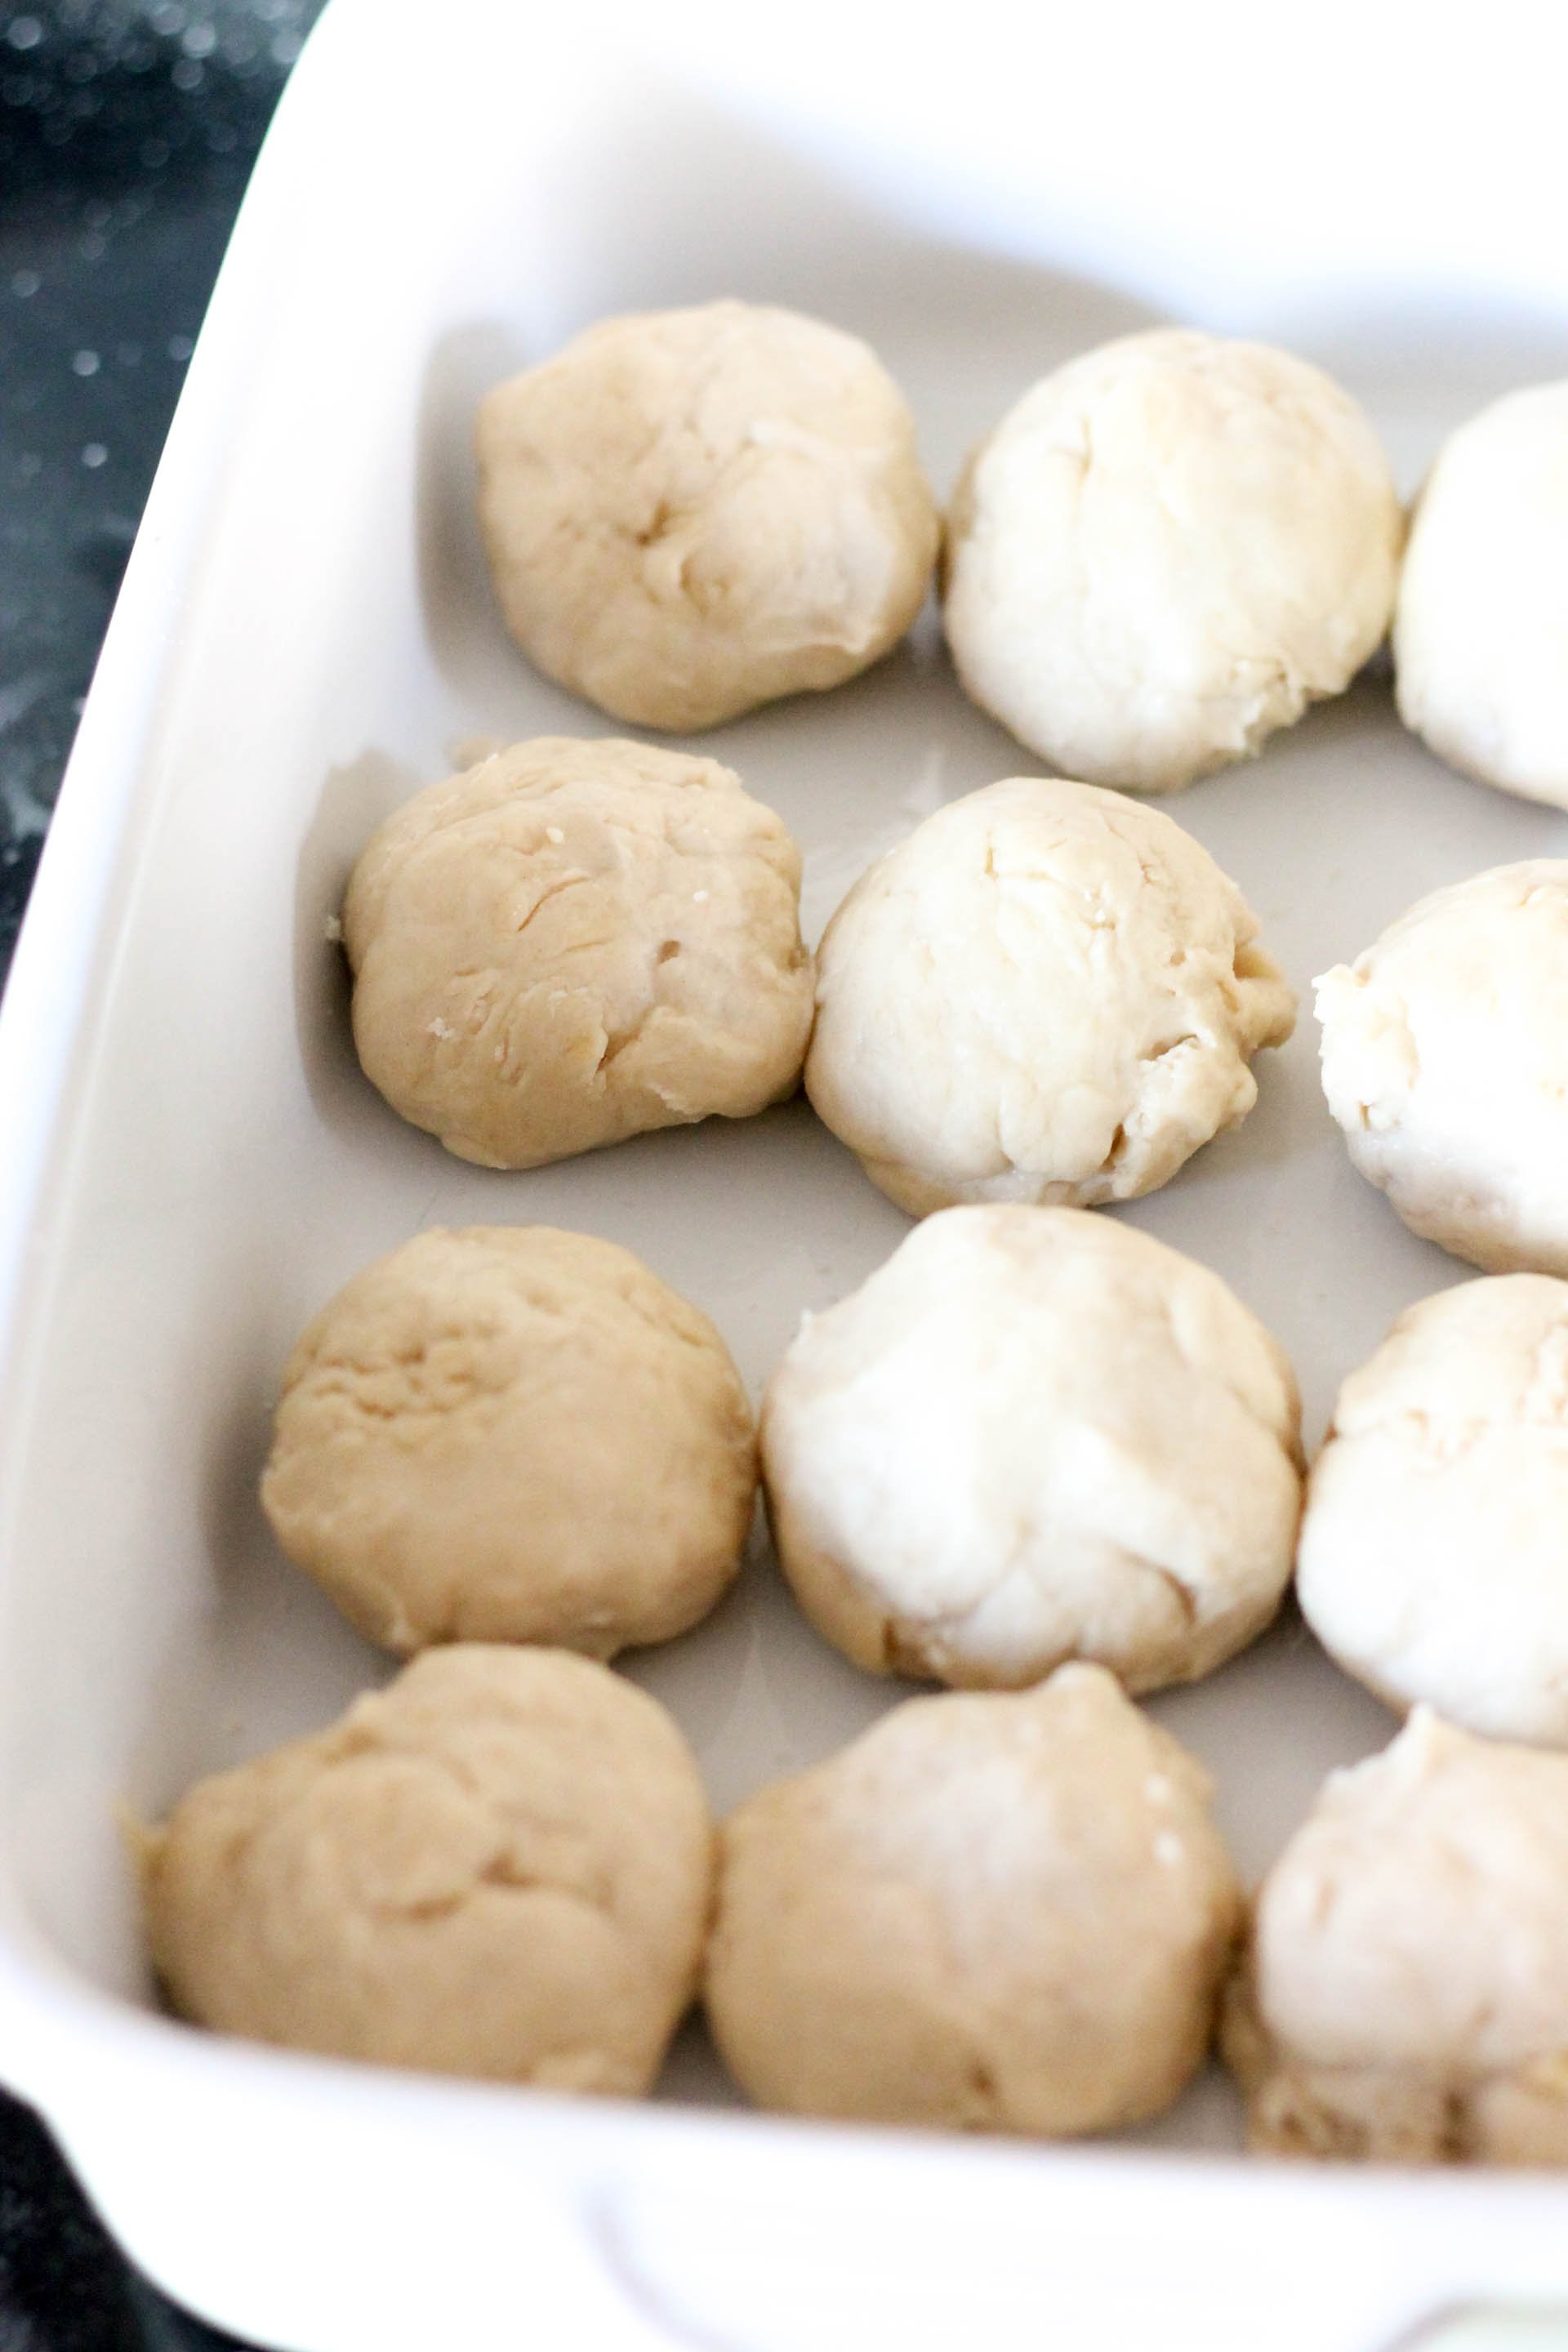 bread dough shaped into balls in bottom of 9x13 baking pan